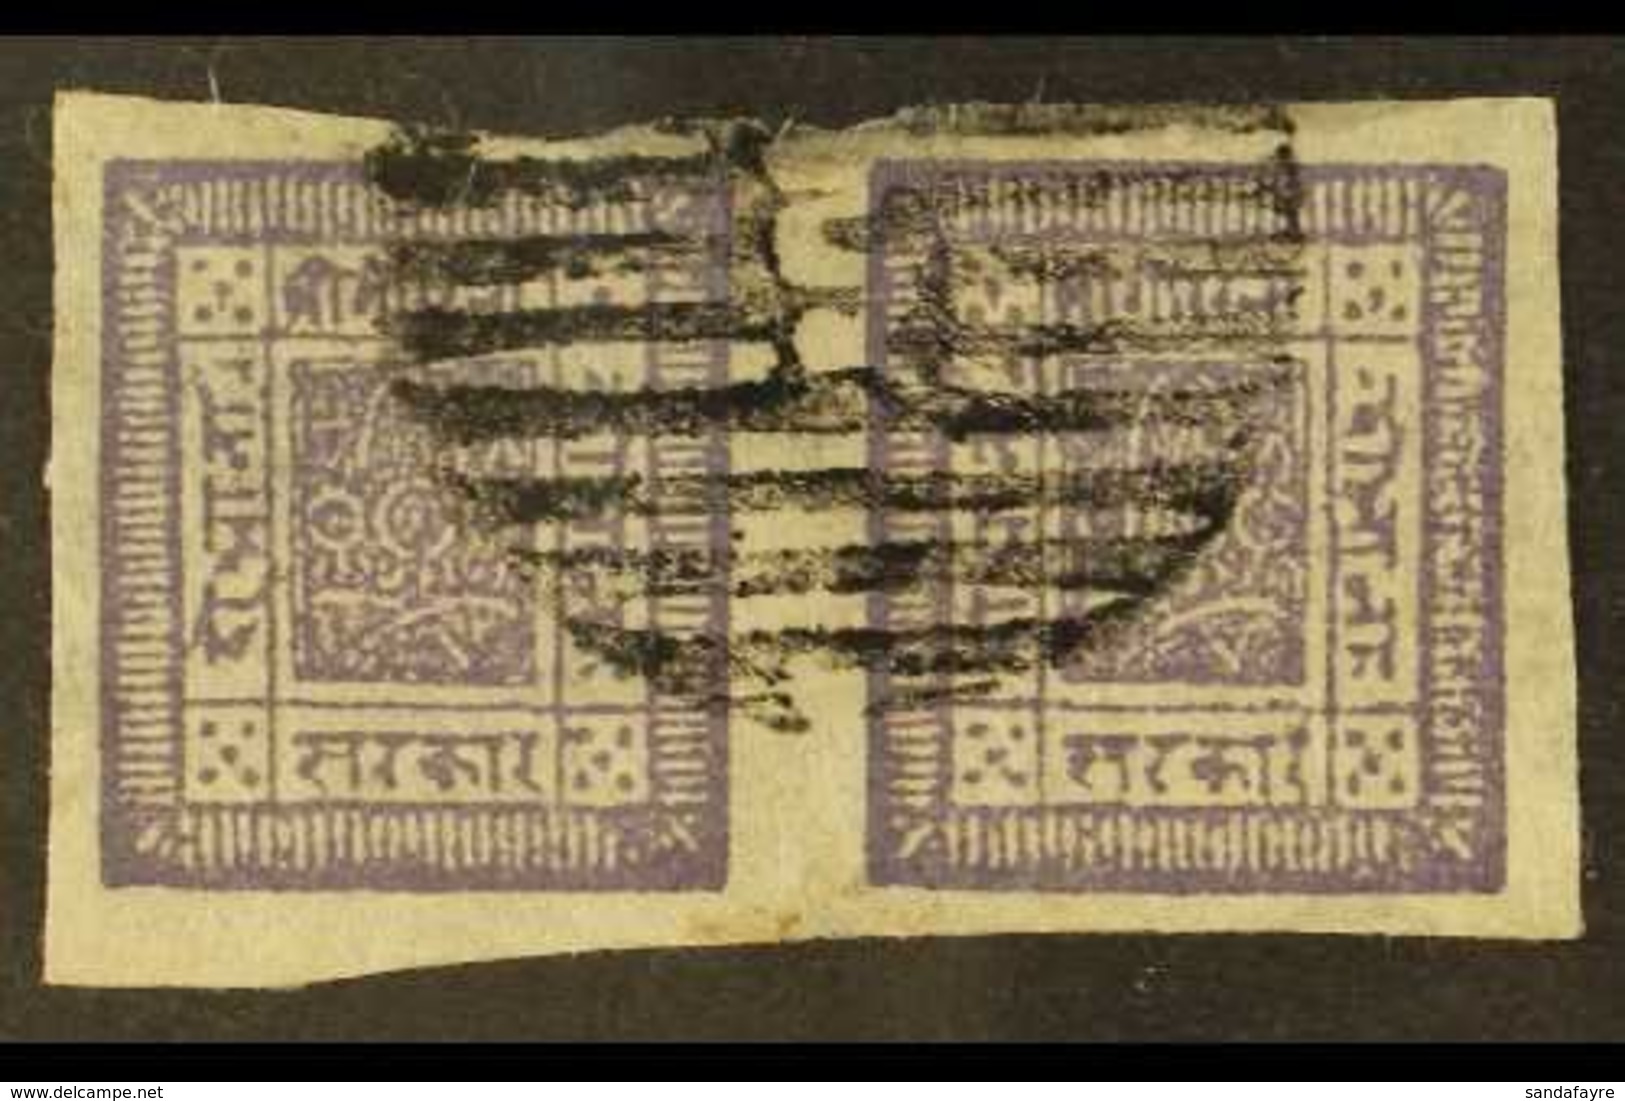 1886-98  2a Violet, Imperf On Native Paper (SG 8, Scott 8, Hellrigl 8), Fine Used Horizontal Pair. For More Images, Plea - Népal